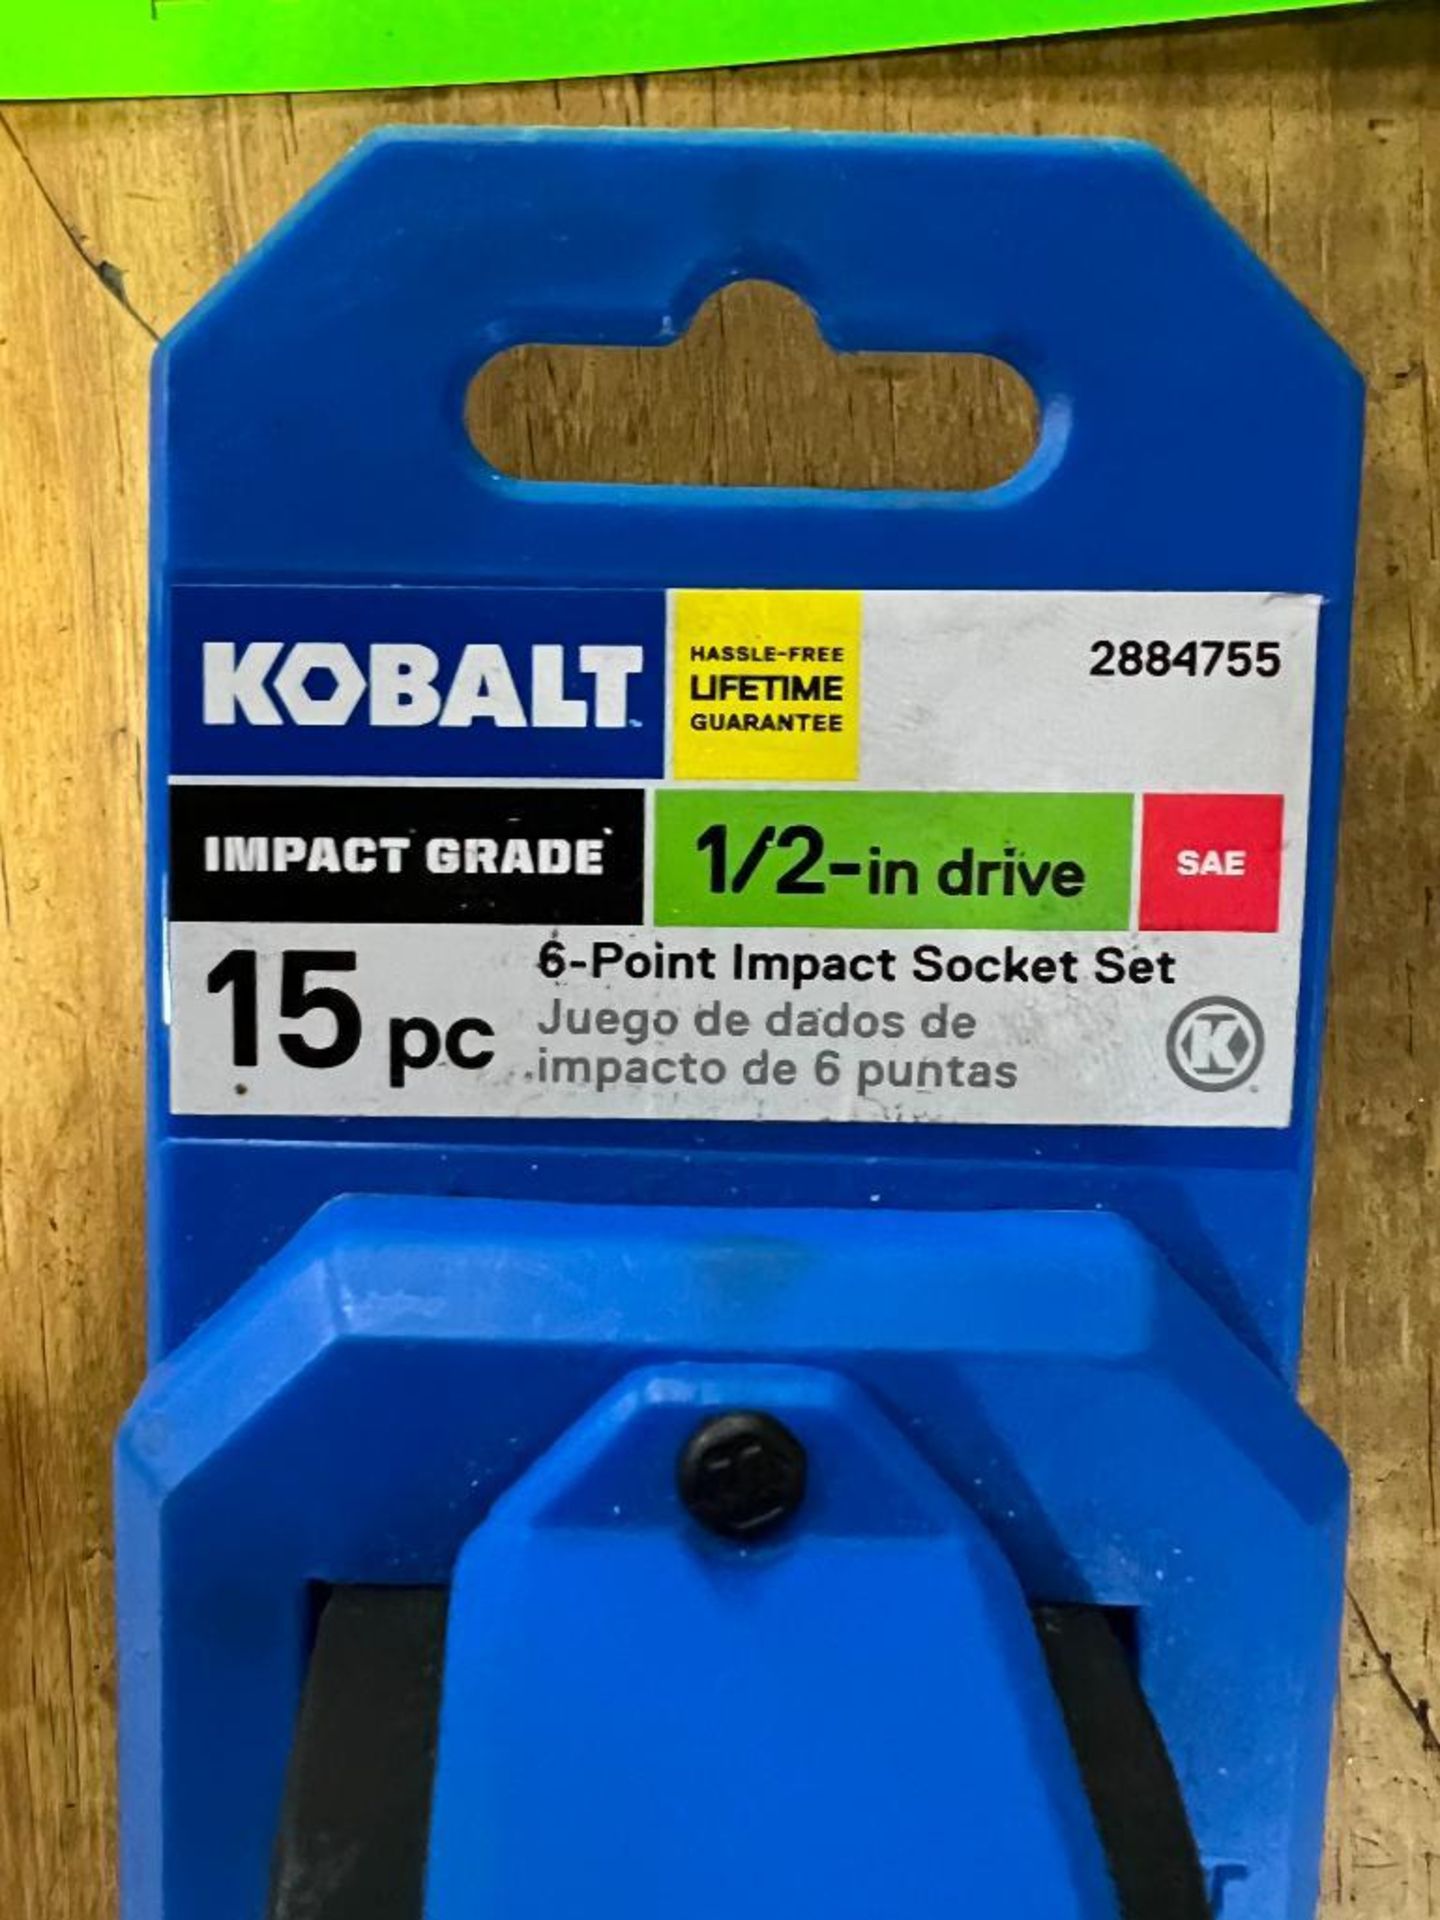 Kobalt 1/2" Drive 6-Point 15 Piece Impact Socket Set - Image 2 of 2